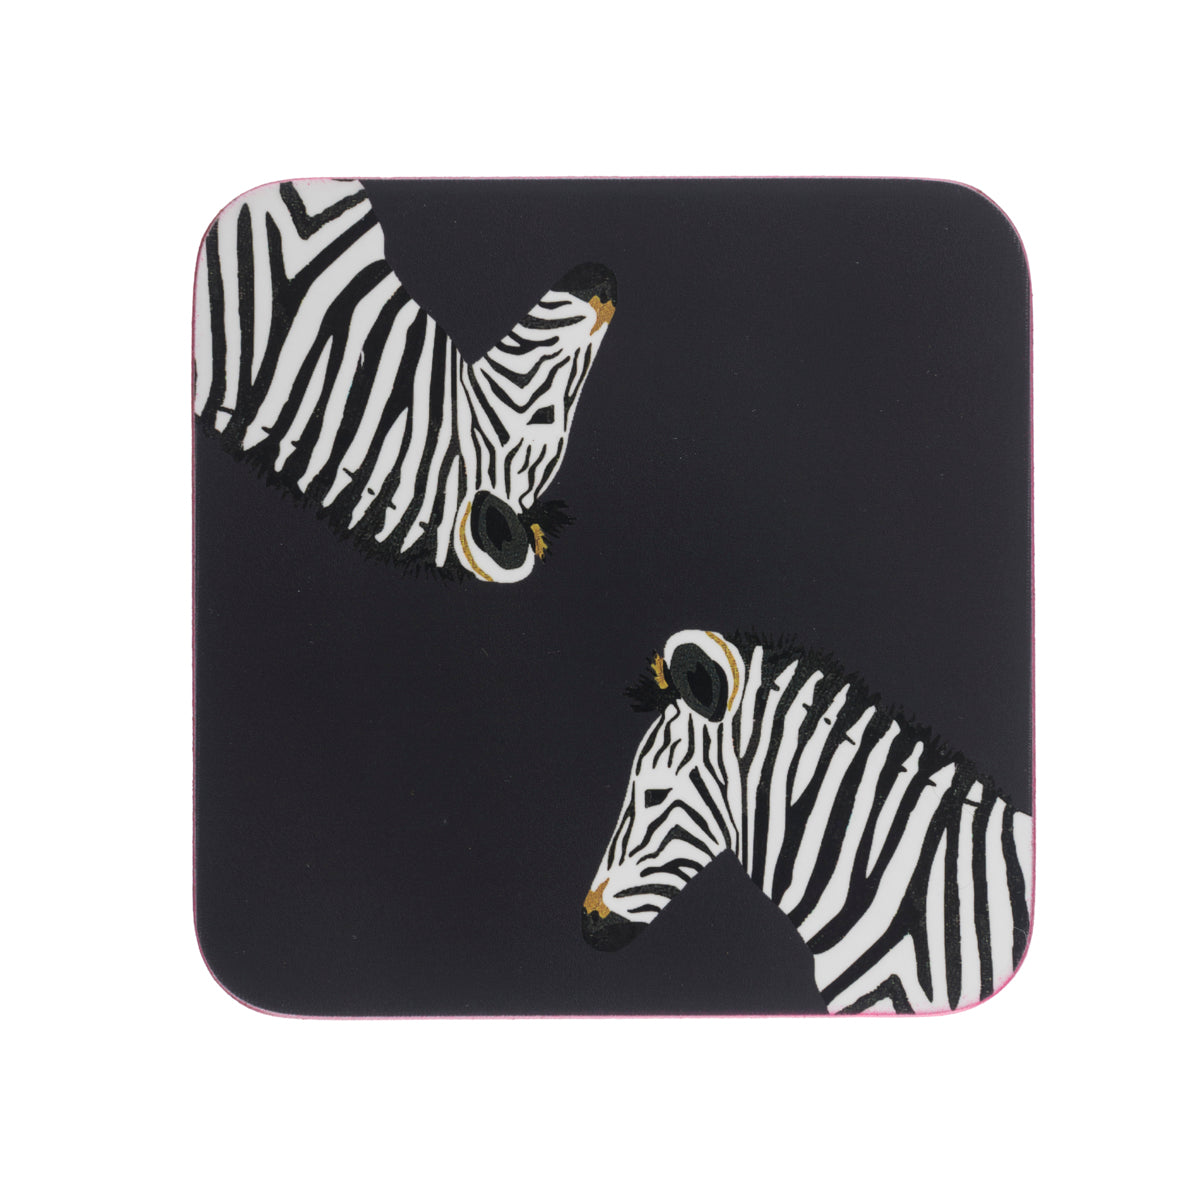 Zebra Coasters (Set of 4) by Sophie Allport